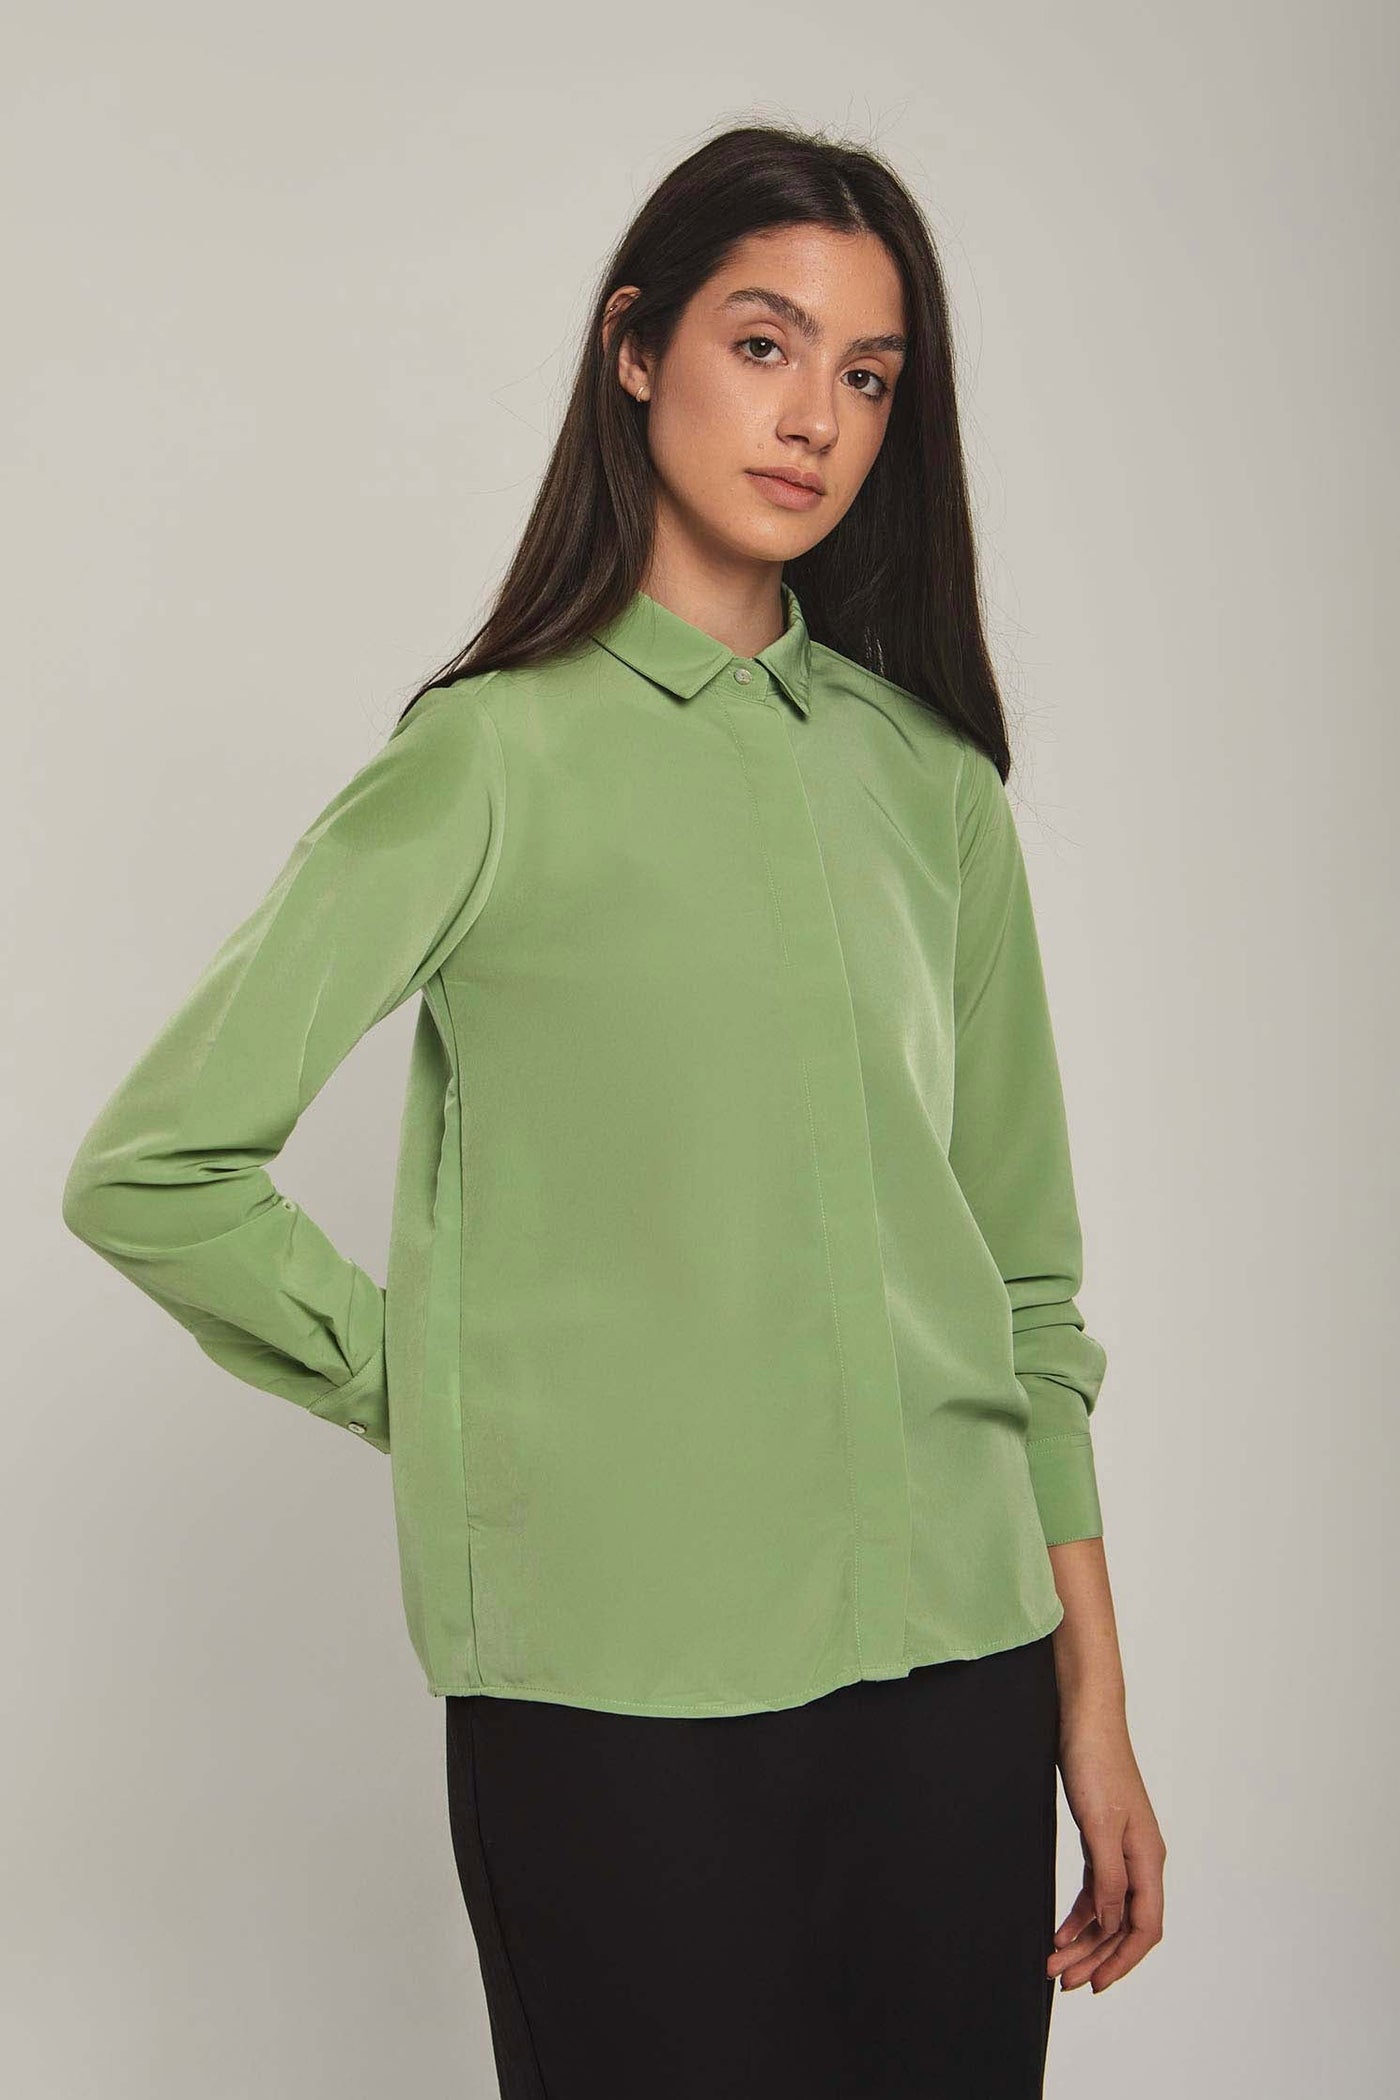 Shirt - Plain Pattern - Long Sleeves